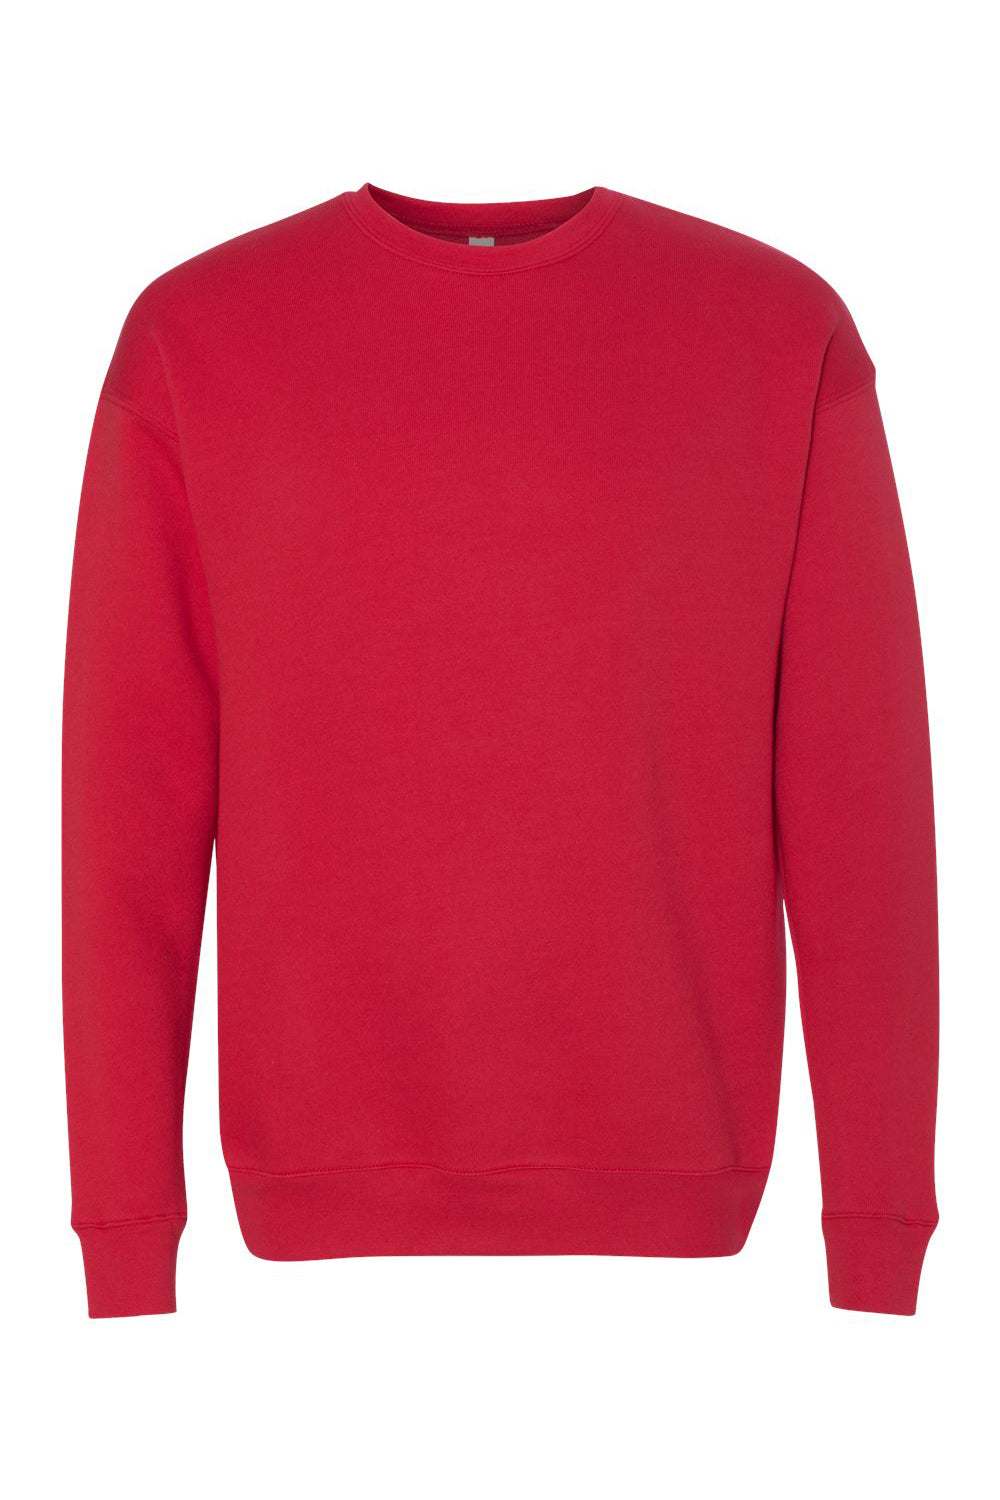 Bella + Canvas BC3945/3945 Mens Fleece Crewneck Sweatshirt Red Flat Front